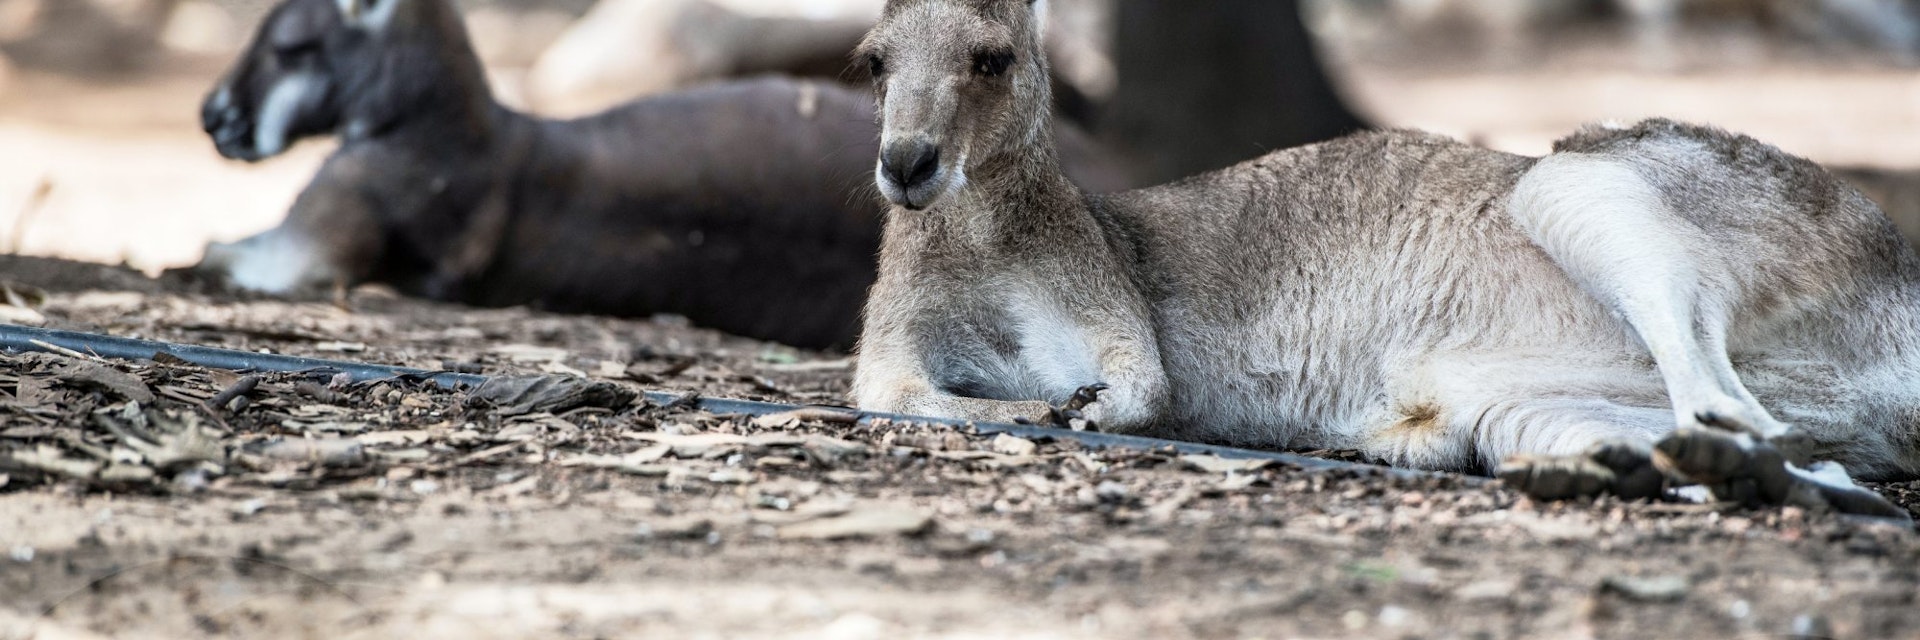 Townsville, Queensland, Australia - July 27 2016: Kangaroo in captivity in Billabong Wildlife Sanctuary, Townsville; Shutterstock ID 1323187730; your: Bridget Brown; gl: 65050; netsuite: Online Editorial; full: POI Image Update